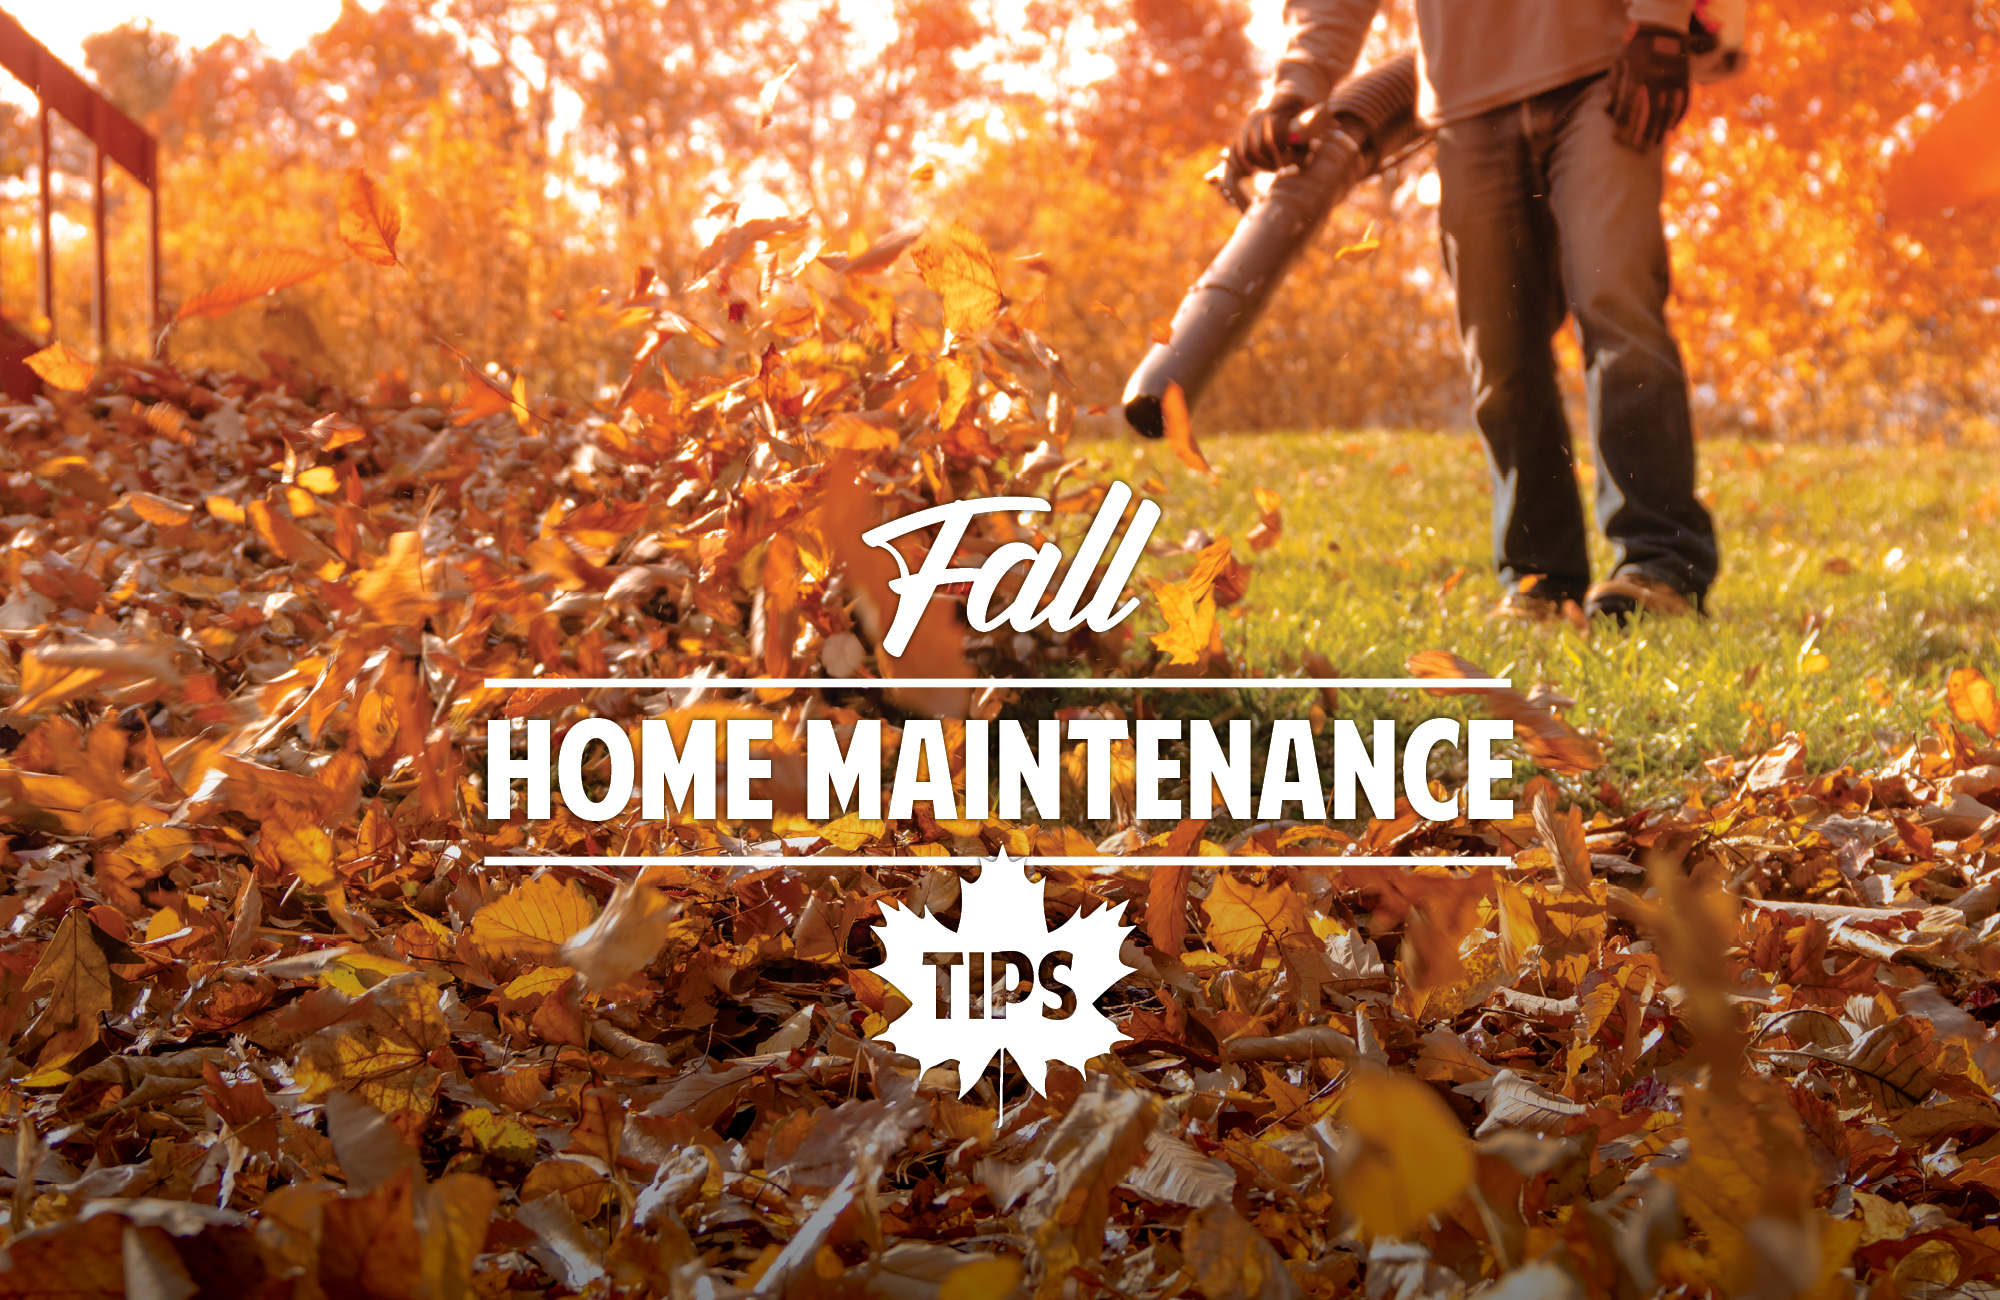 Fall home maintenance tips